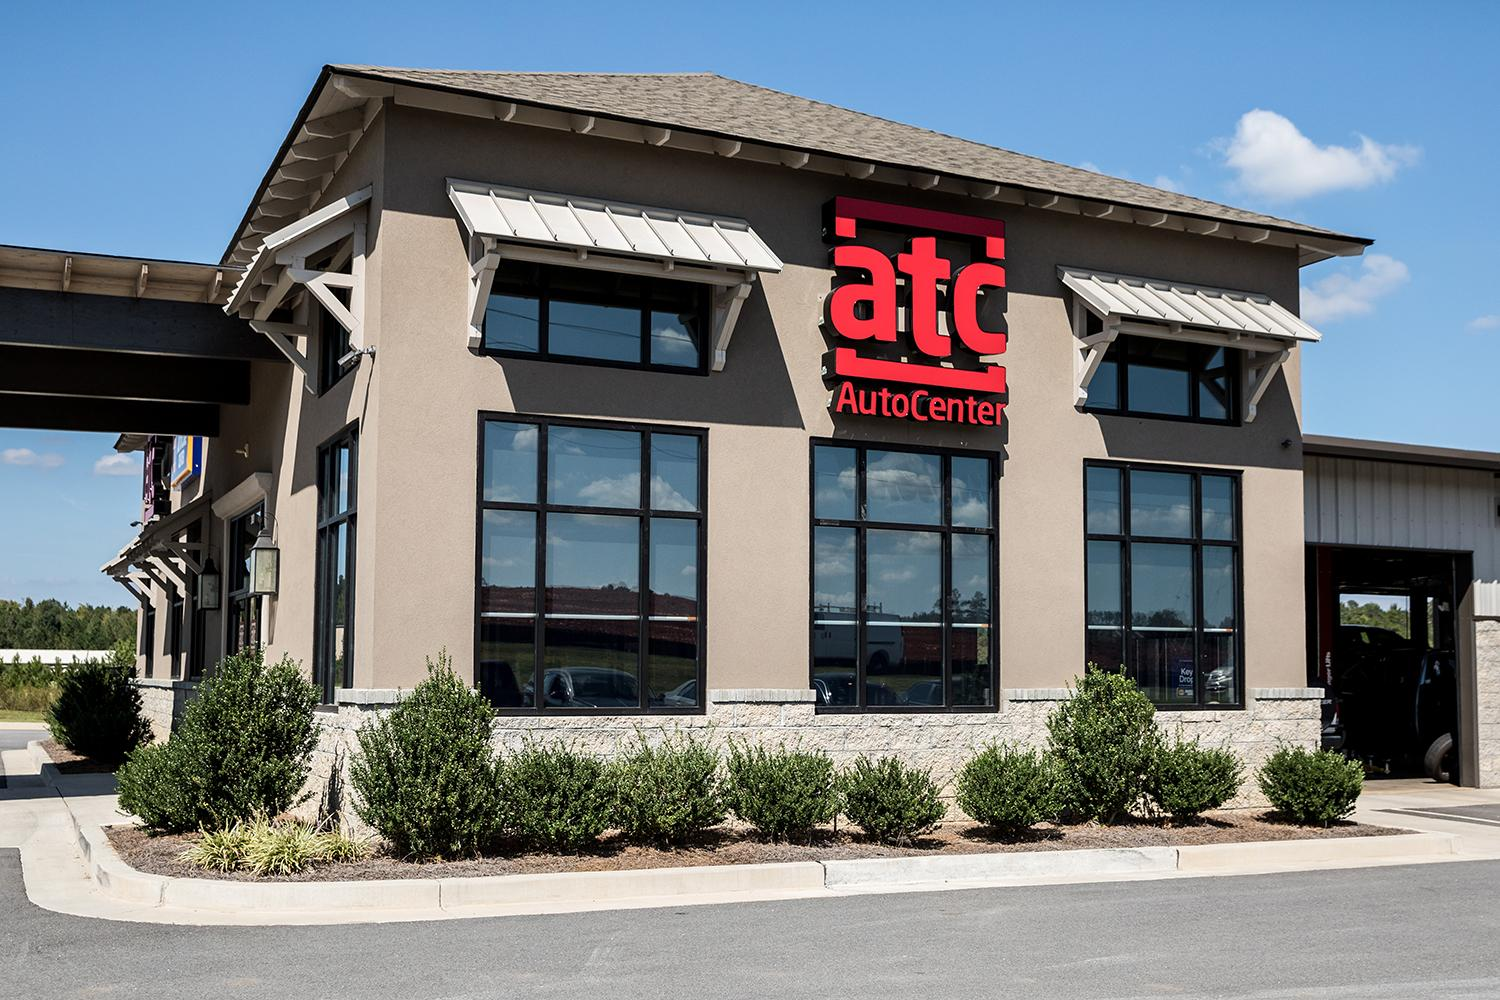 atc Auto Center'